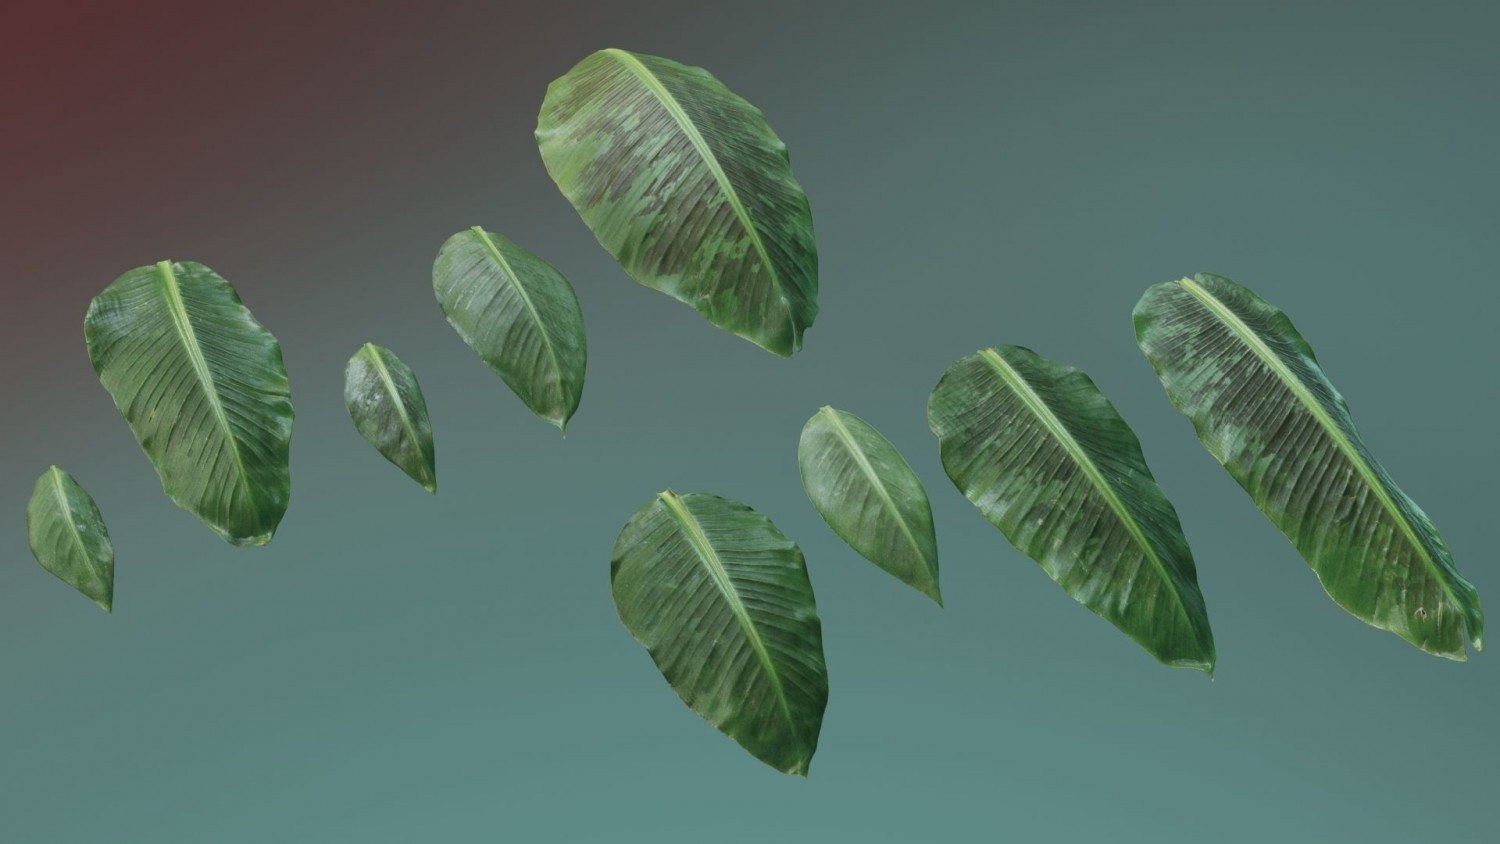 Banana leaf texture